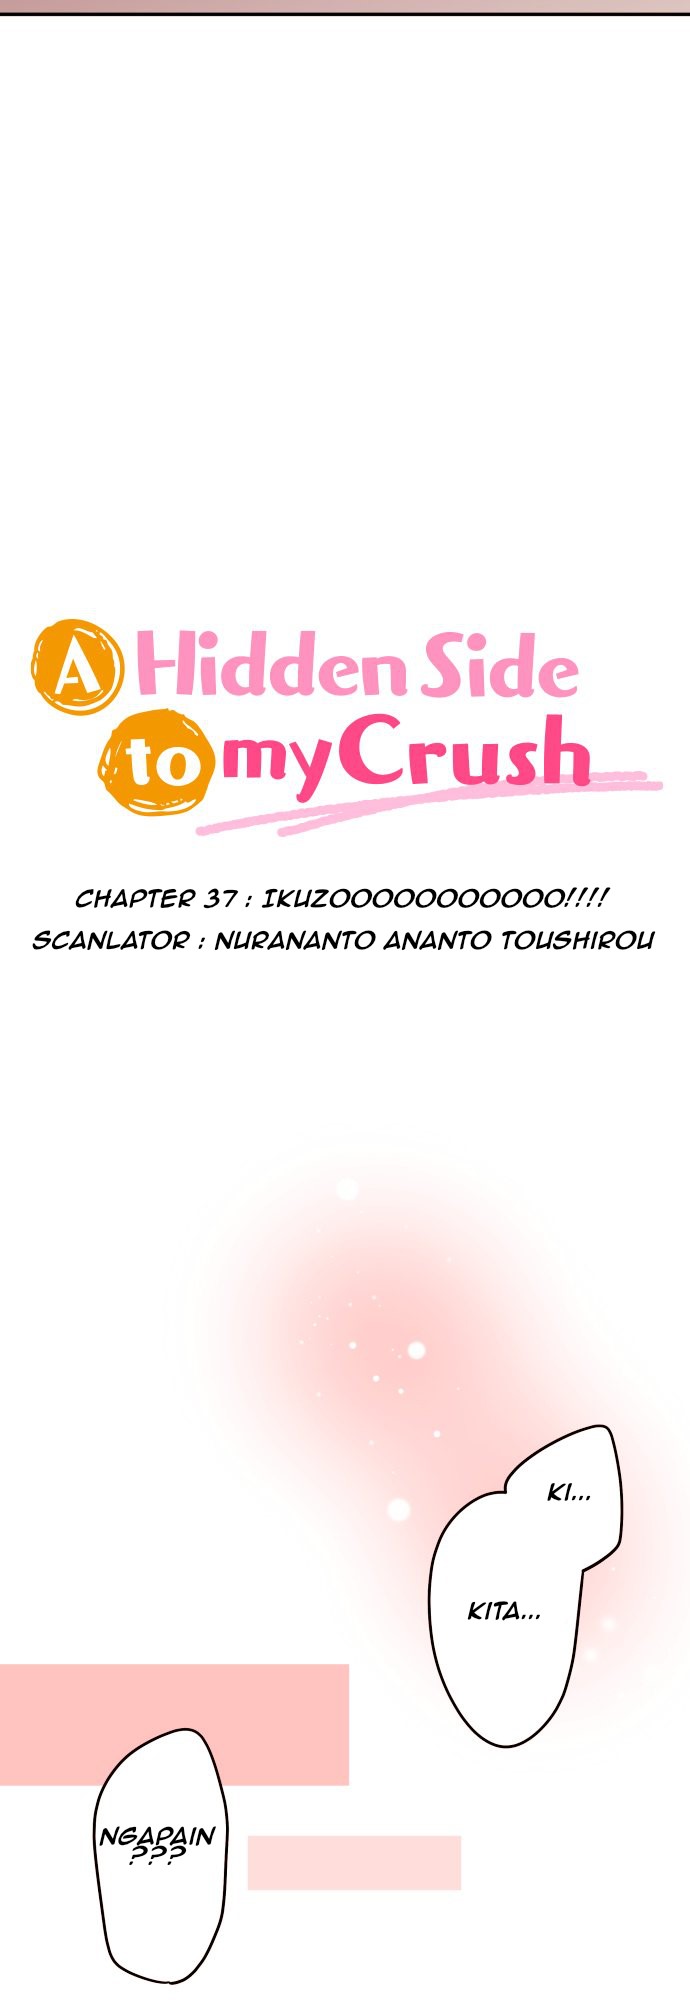 Waka-chan Is Flirty Again Chapter 37 3